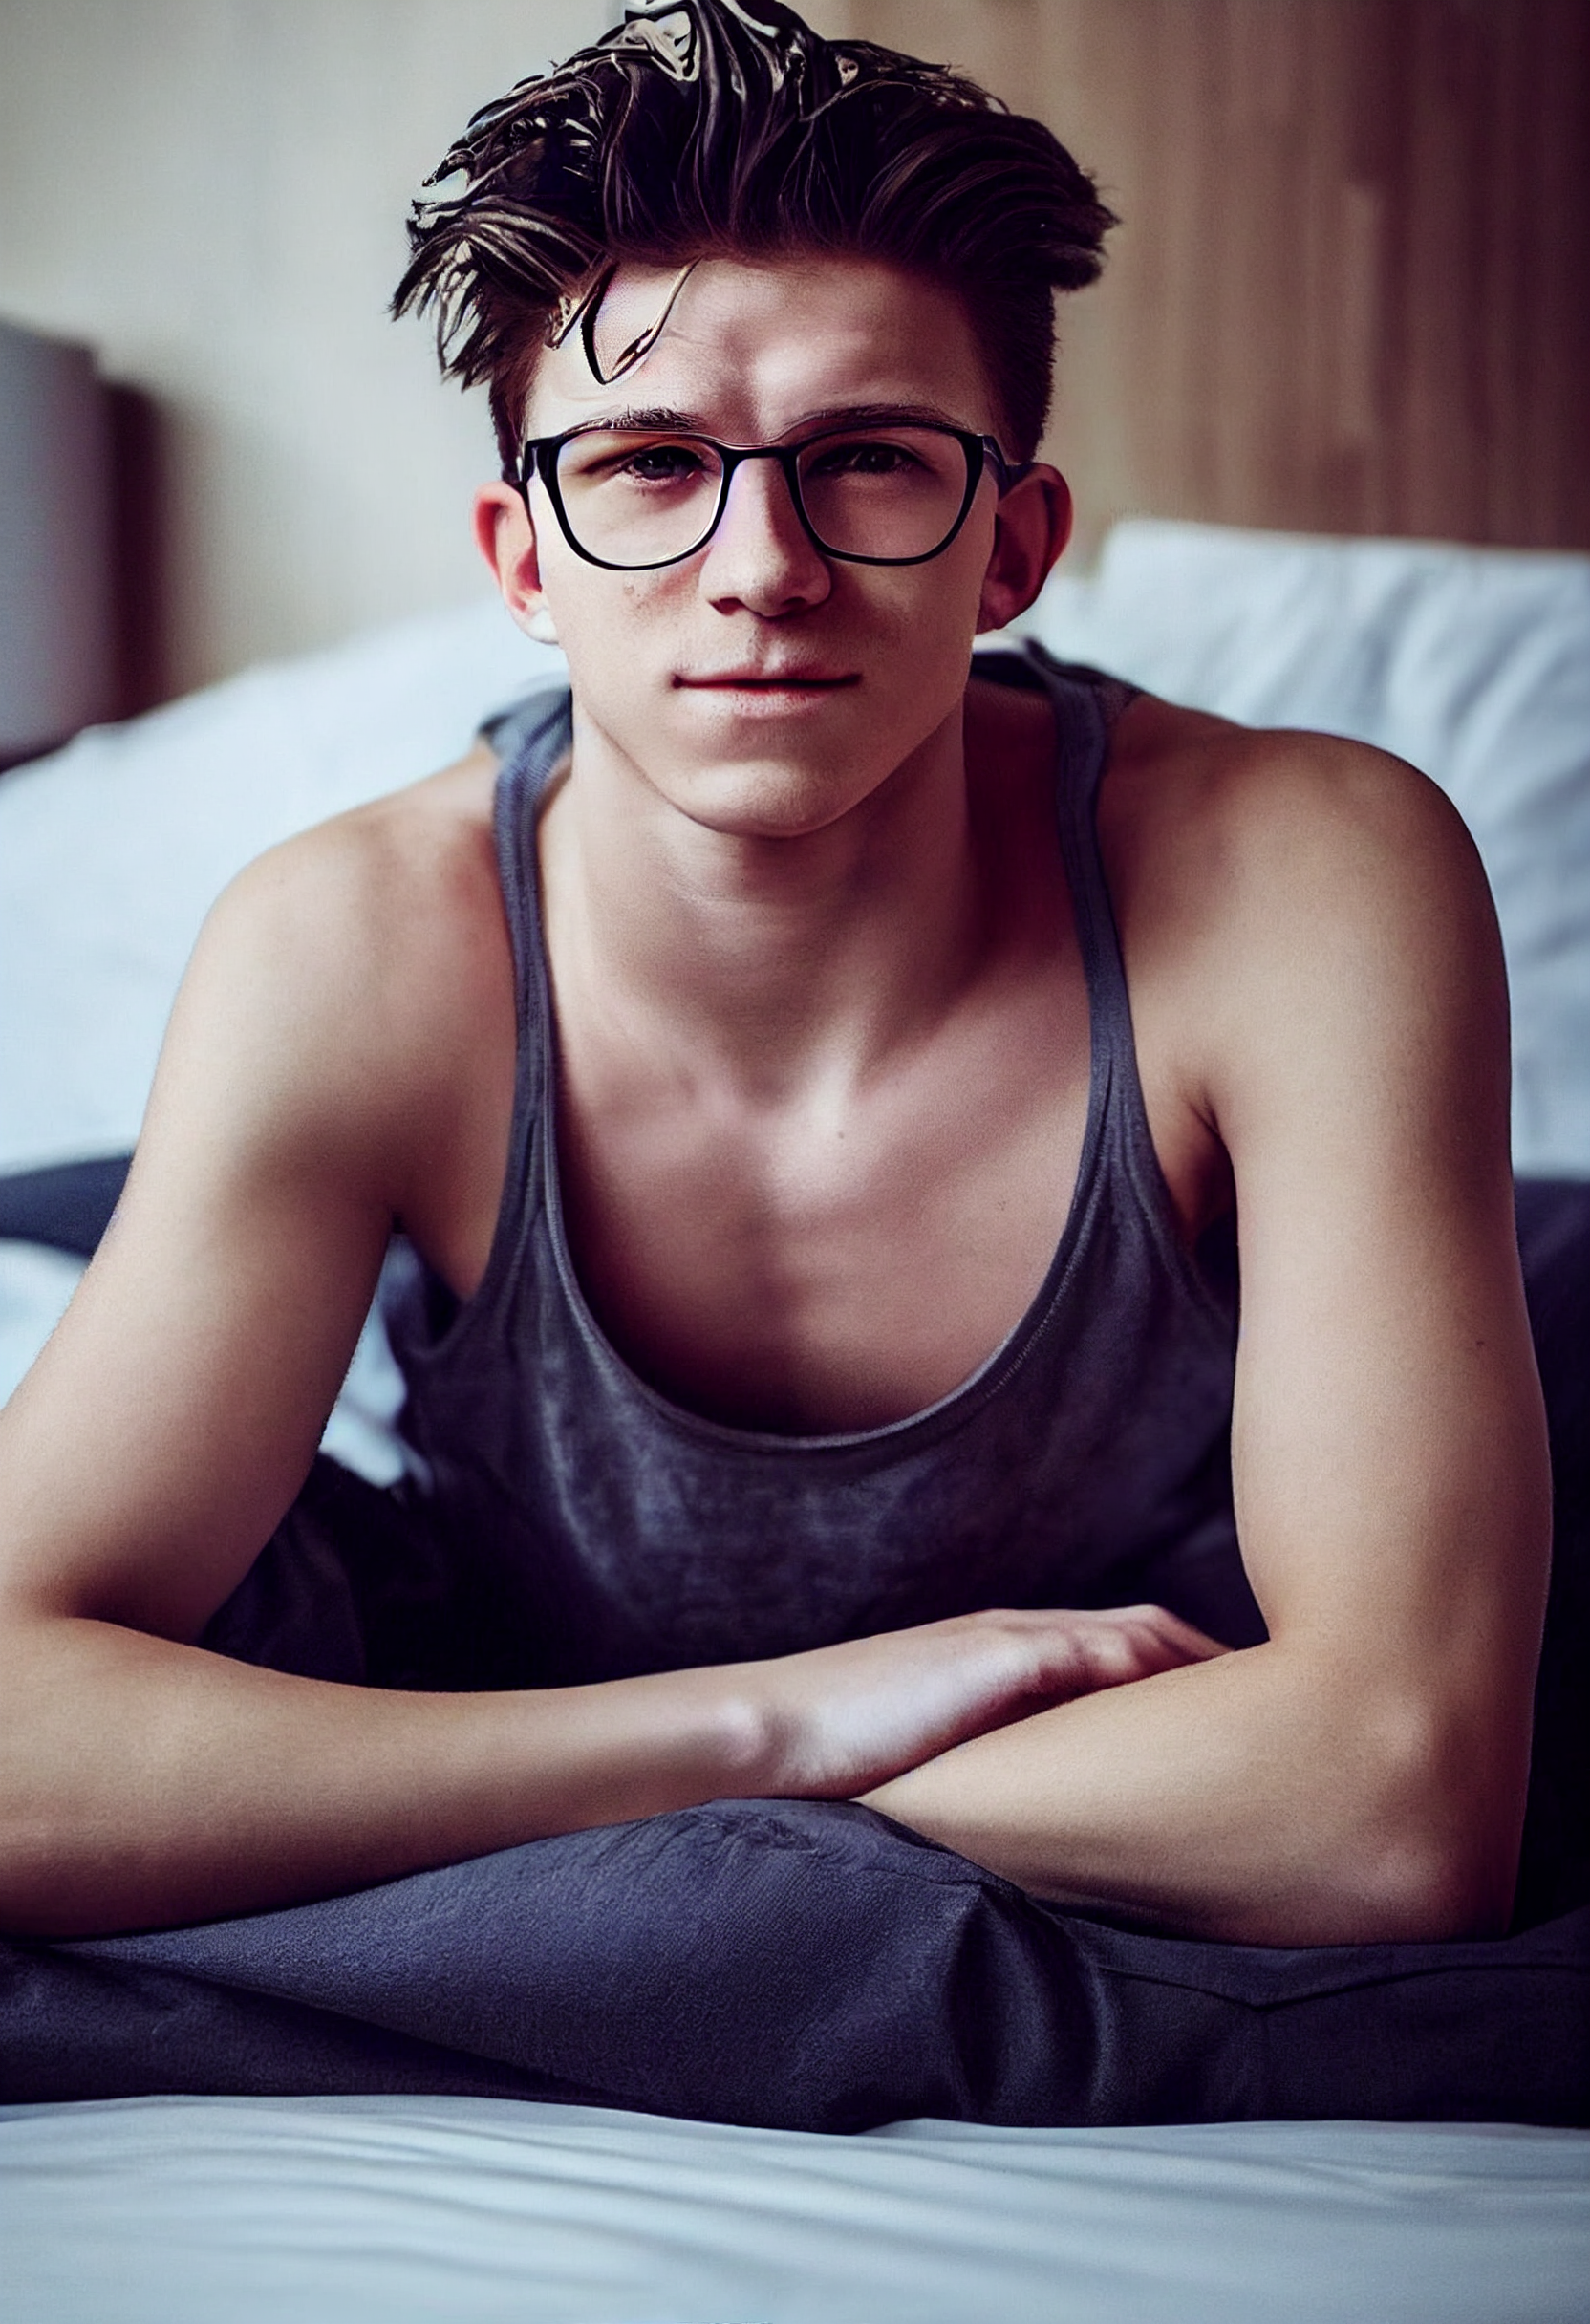 nerd glasses tumblr boy